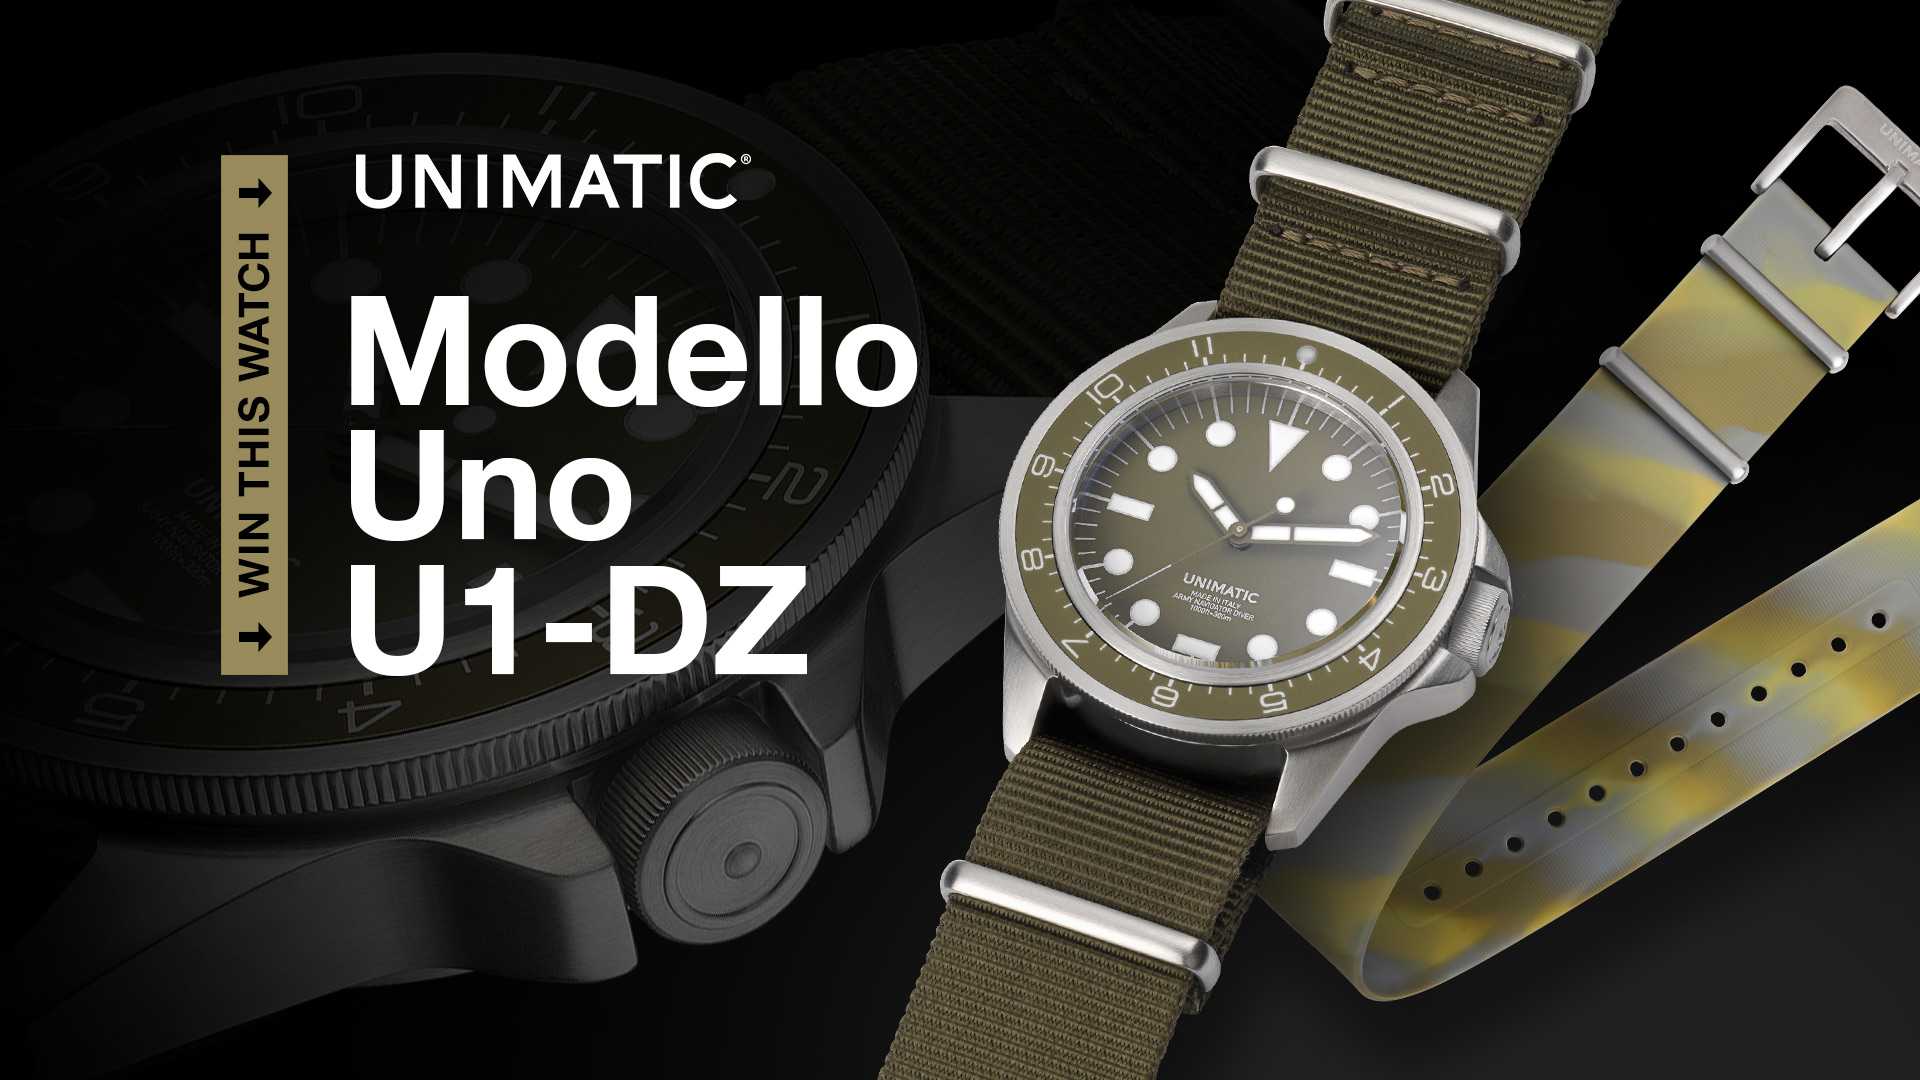 WATCH GIVEAWAY: Unimatic Modelo Uno U1-DZ Limited Edition Watch